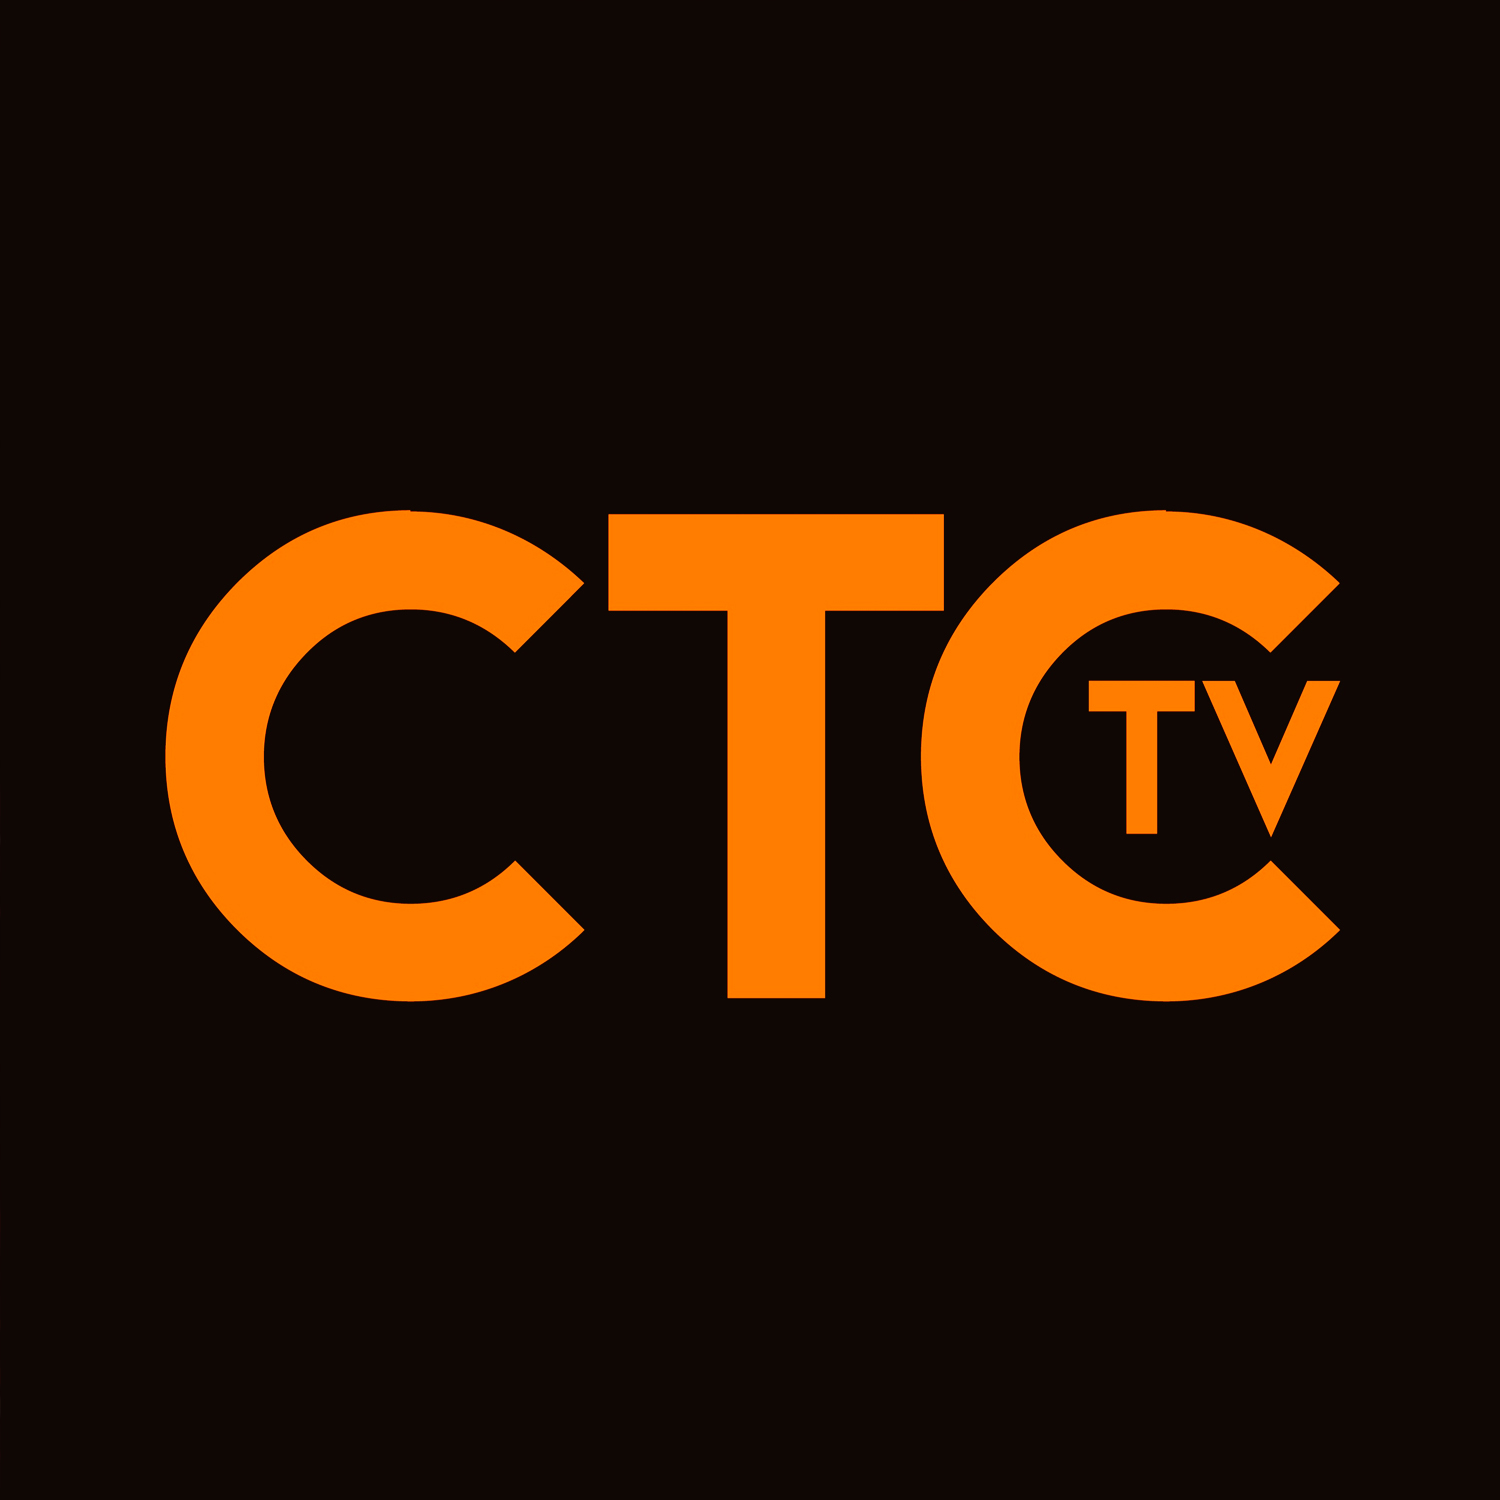 CTC TV - Facebook, Instagram, Twitter, Snapchat, Website, Telefon, Email - Kontakt & Informacije | EMDC Network